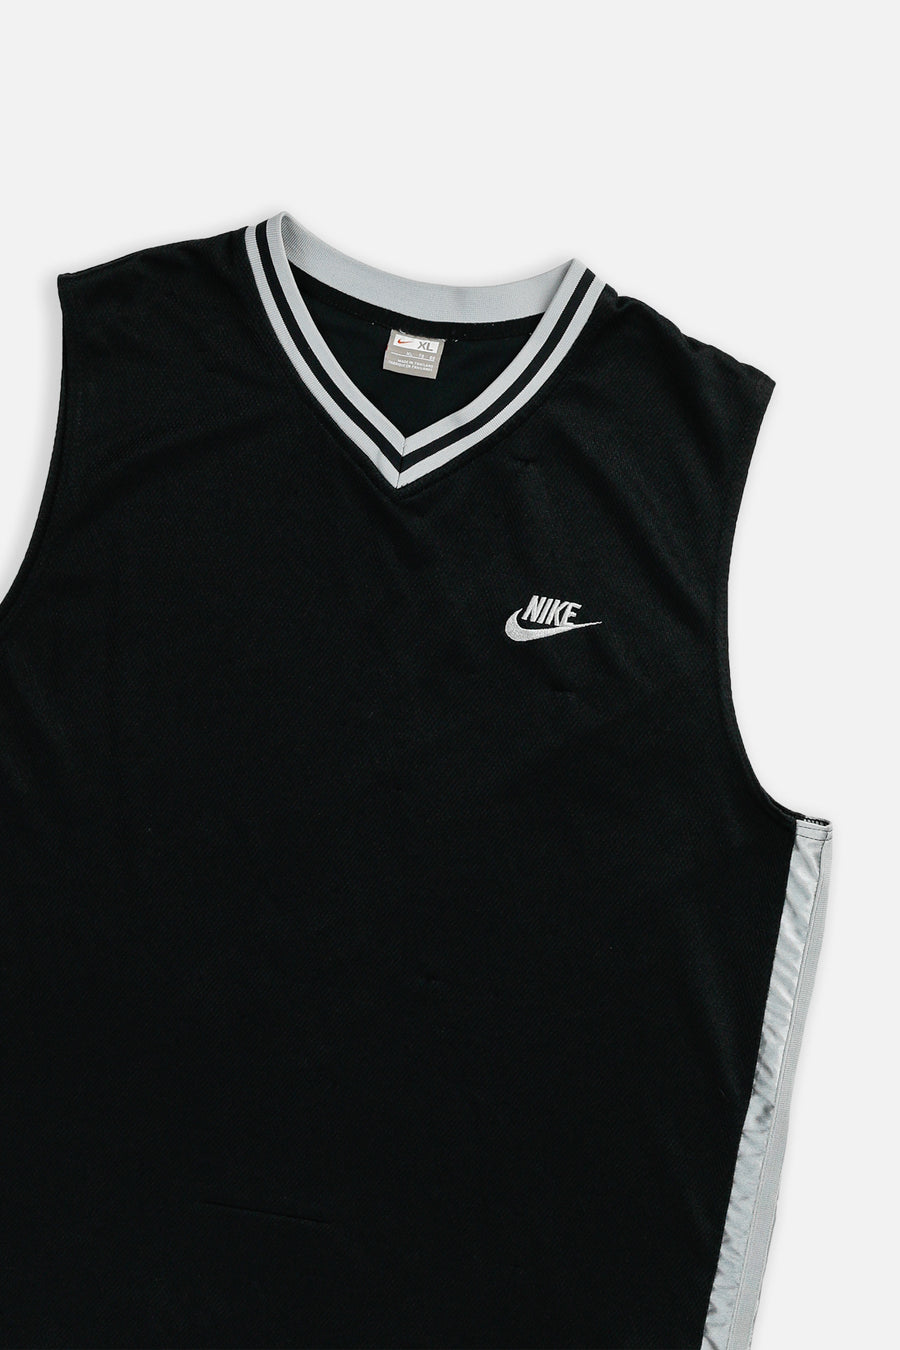 Vintage Nike Basketball Jersey - XL